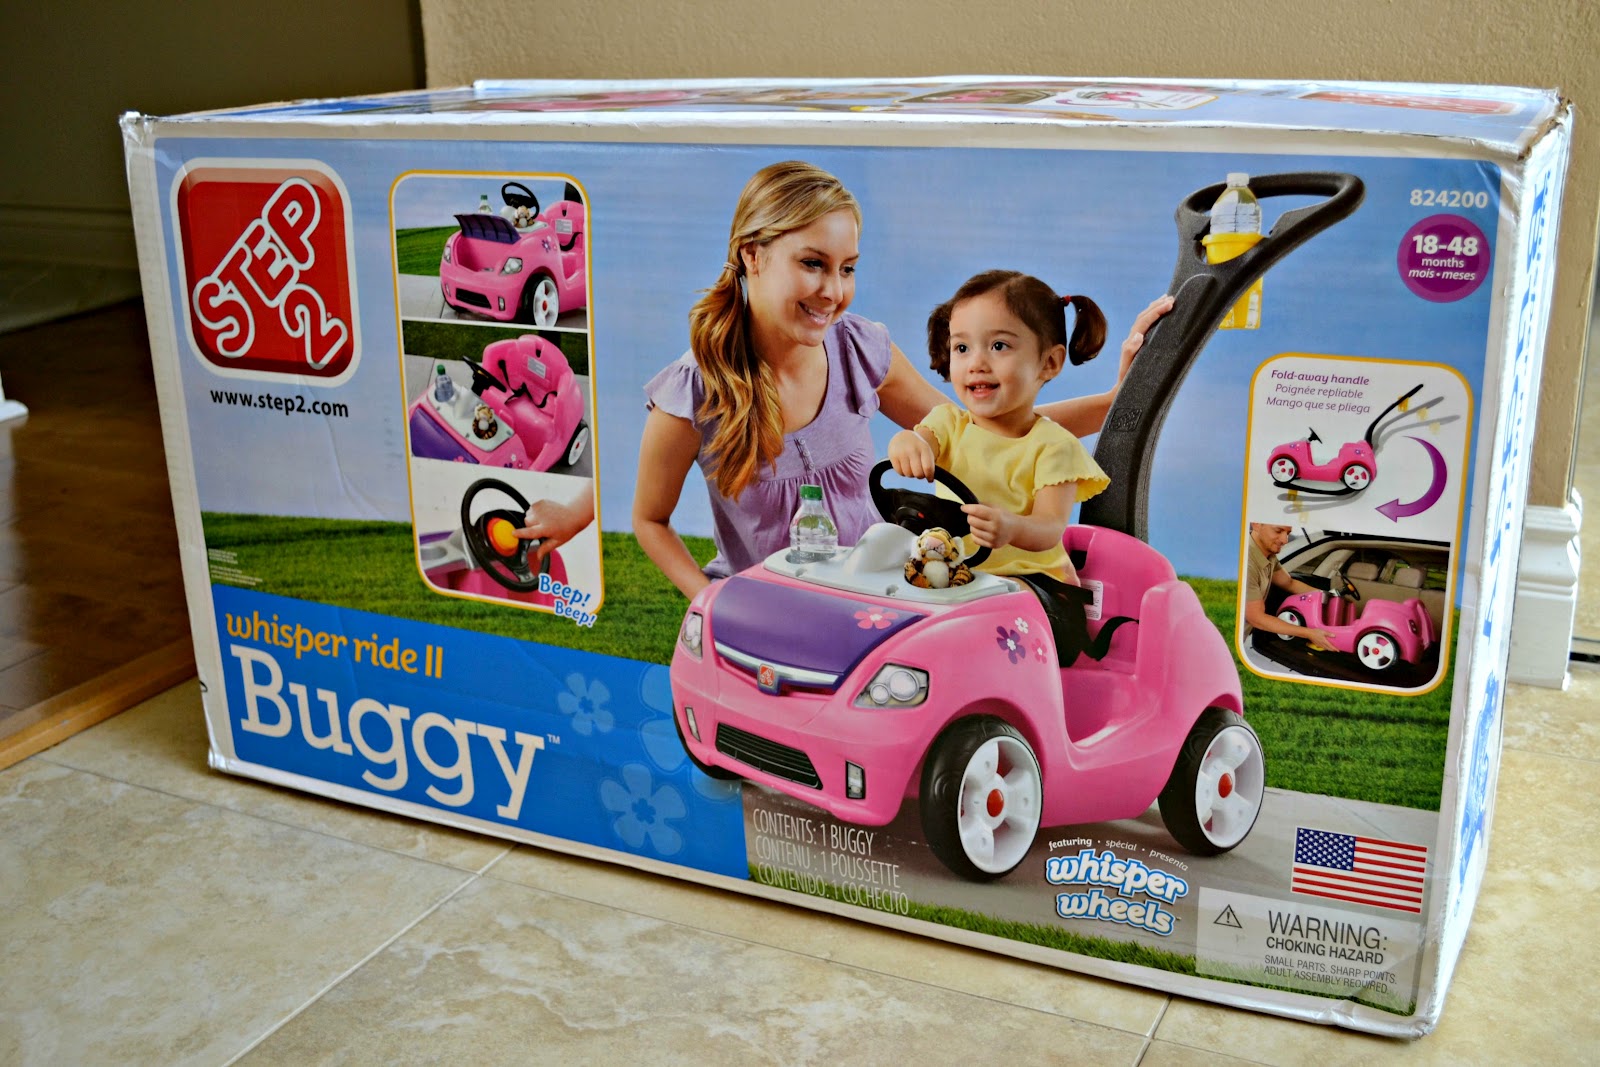 Pink Toddler Ride On Toy Step2 Whisper Ride II Push Car